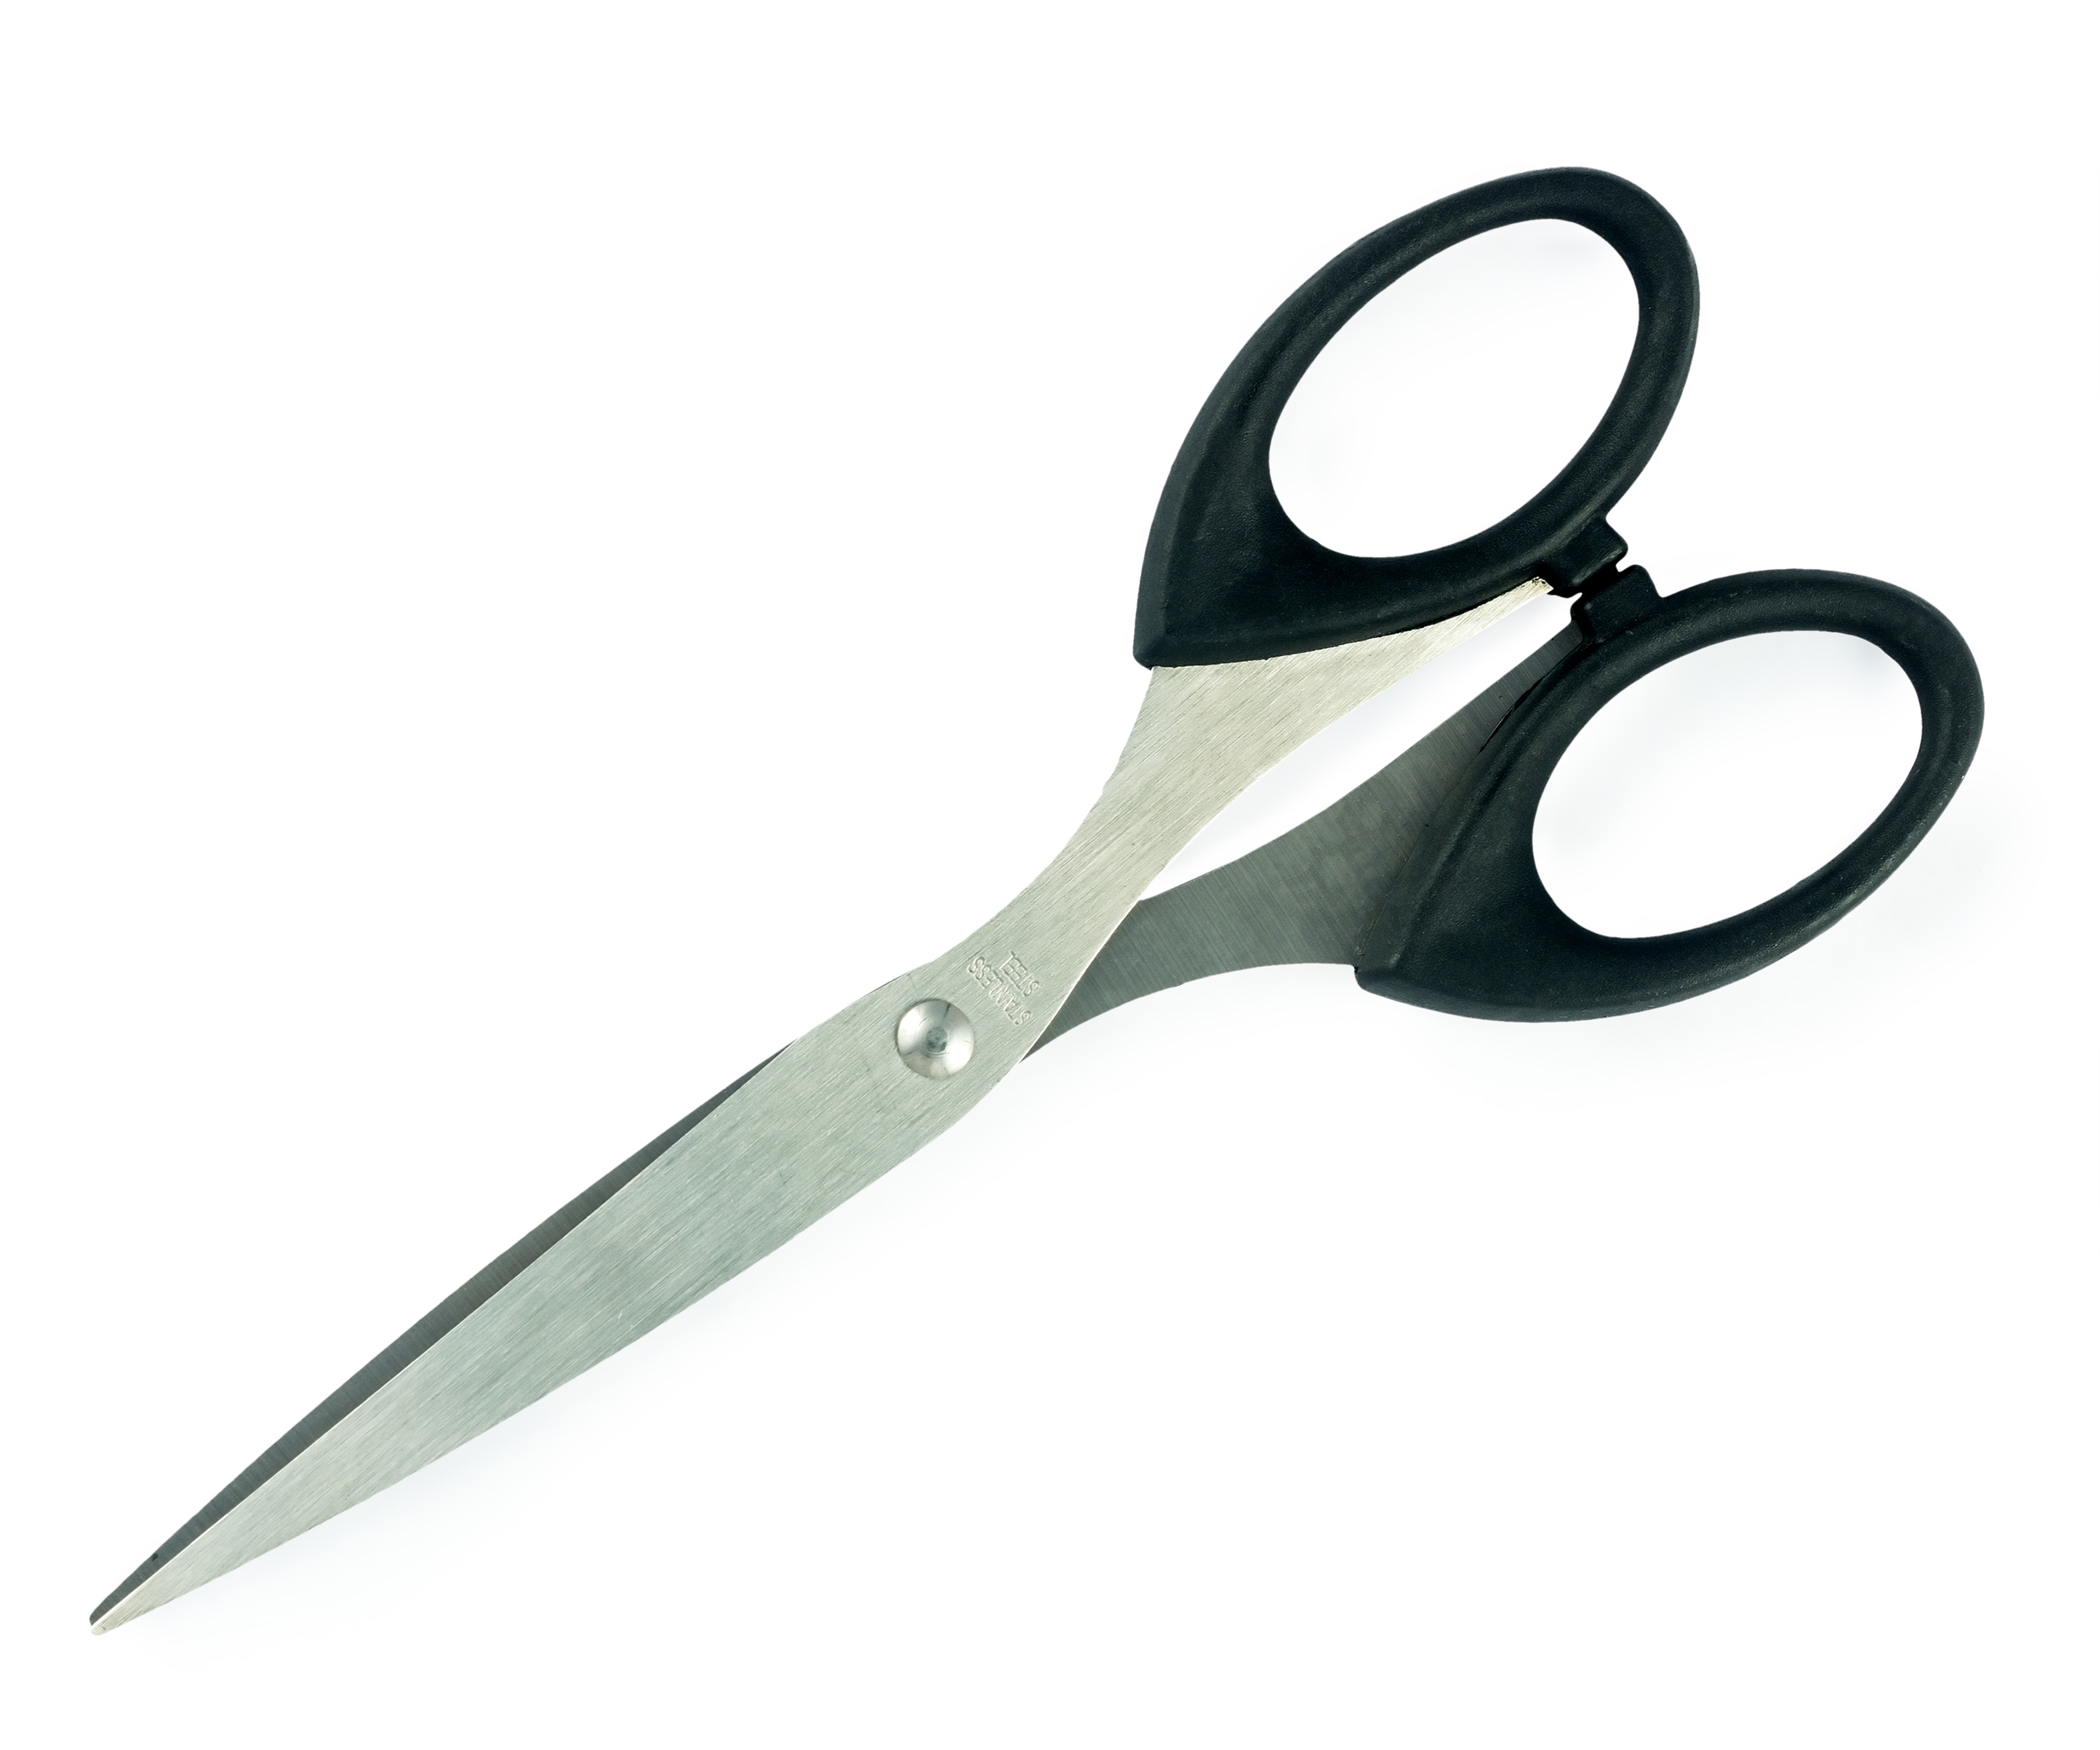 Pair_of_scissors_with_black_handle%2C_2015-06-07.jpg